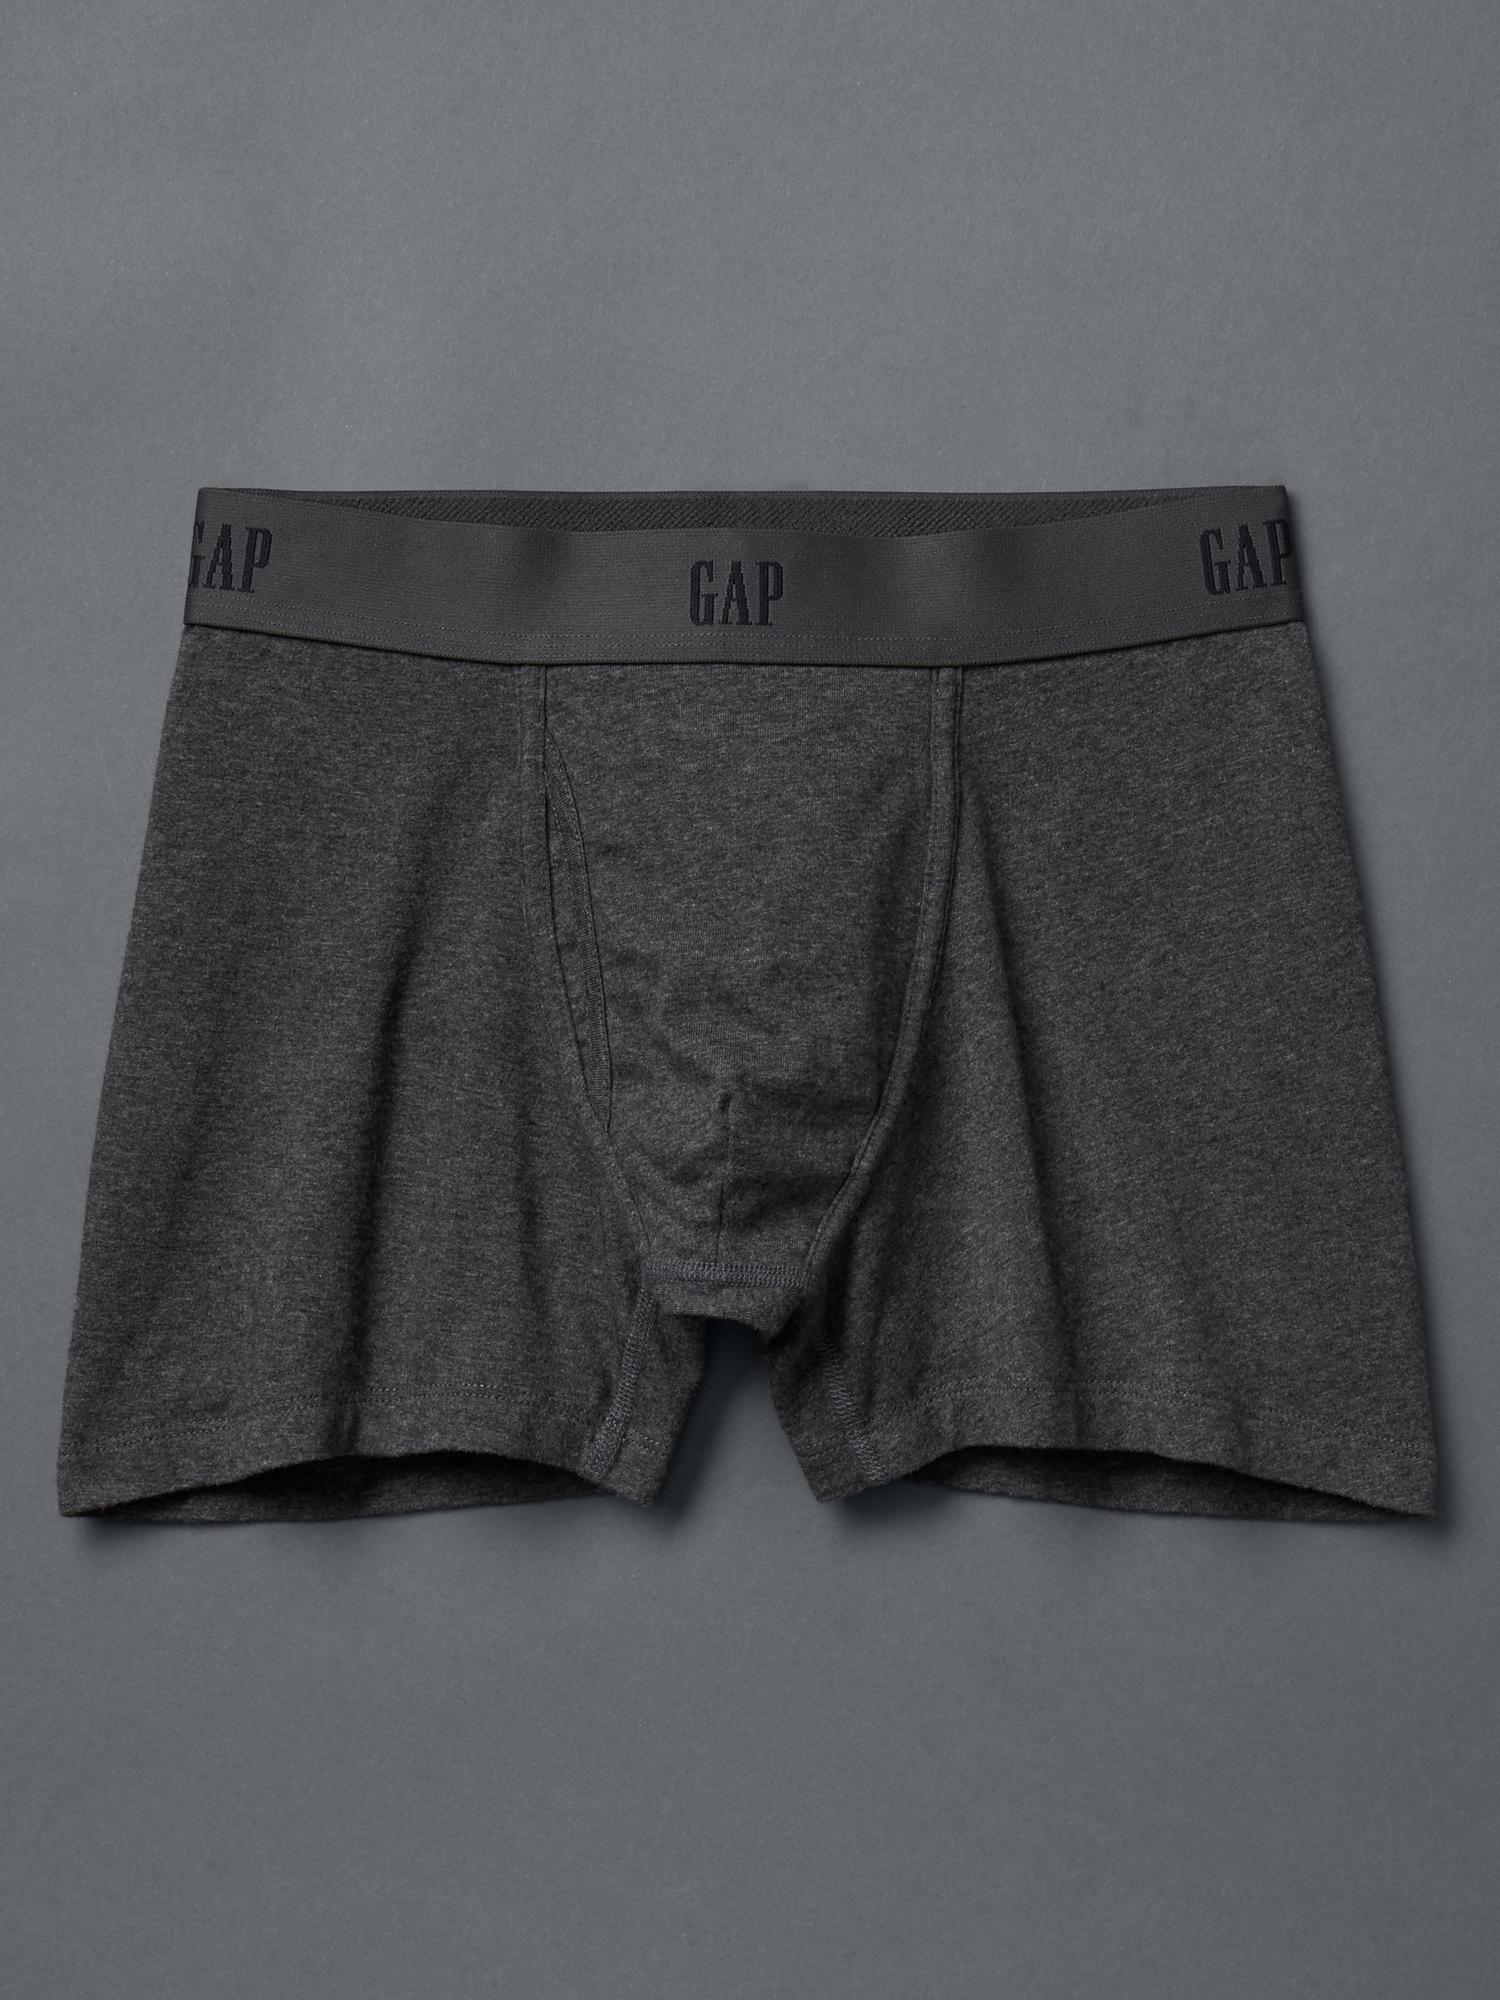 Gap Men's 3-Pk. Contour Pouch 3 Trunks - Light Gray/Dark Gray